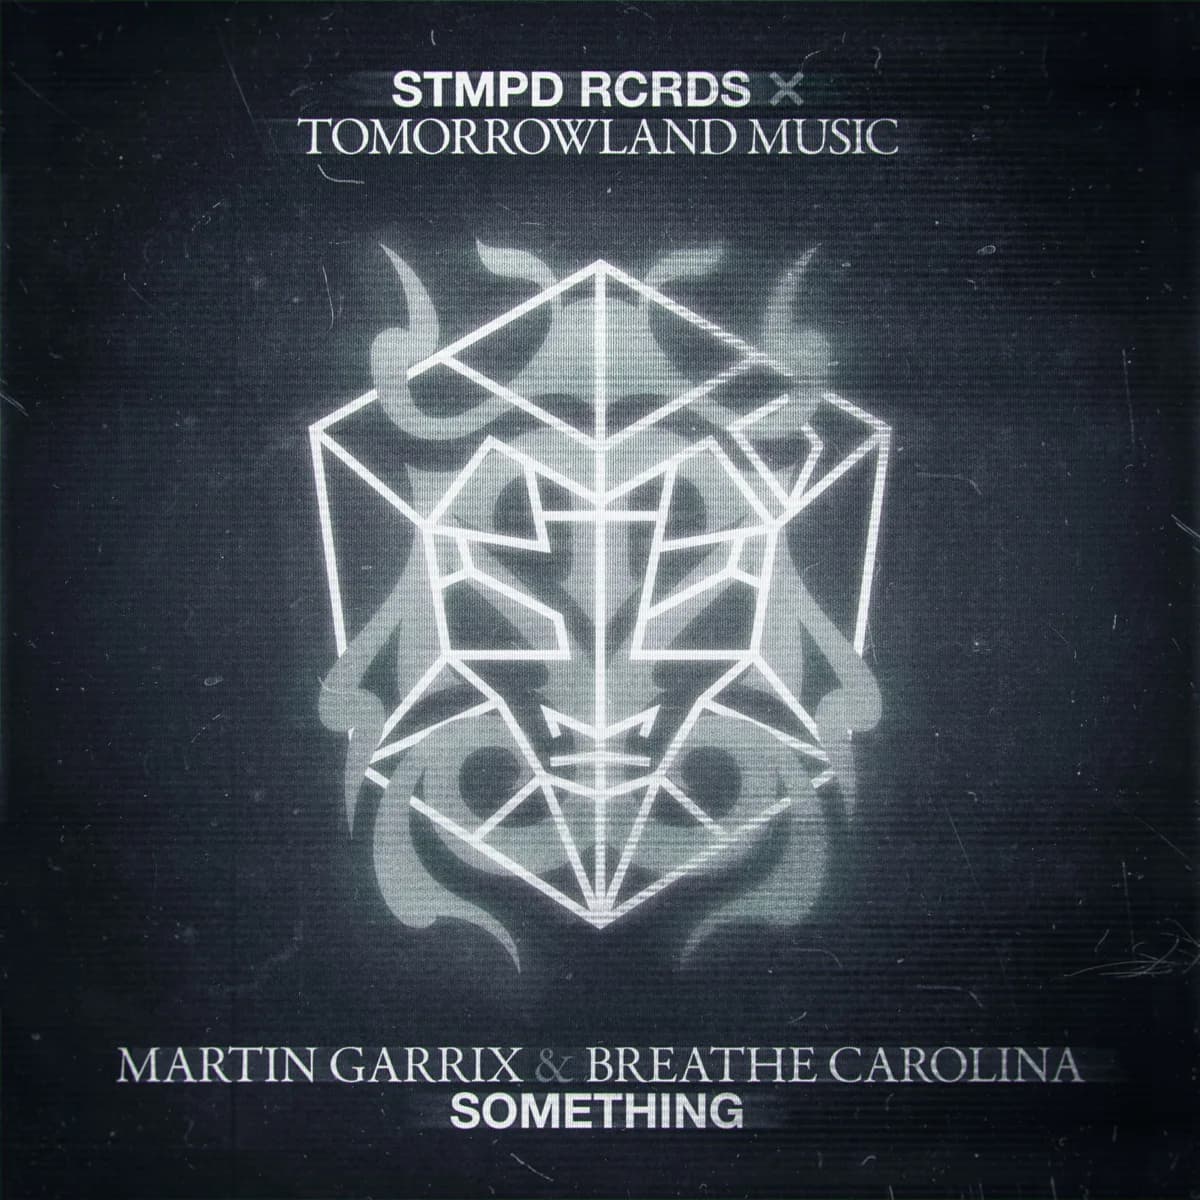 Martin Garrix e Breathe Caroline lançam "Something"